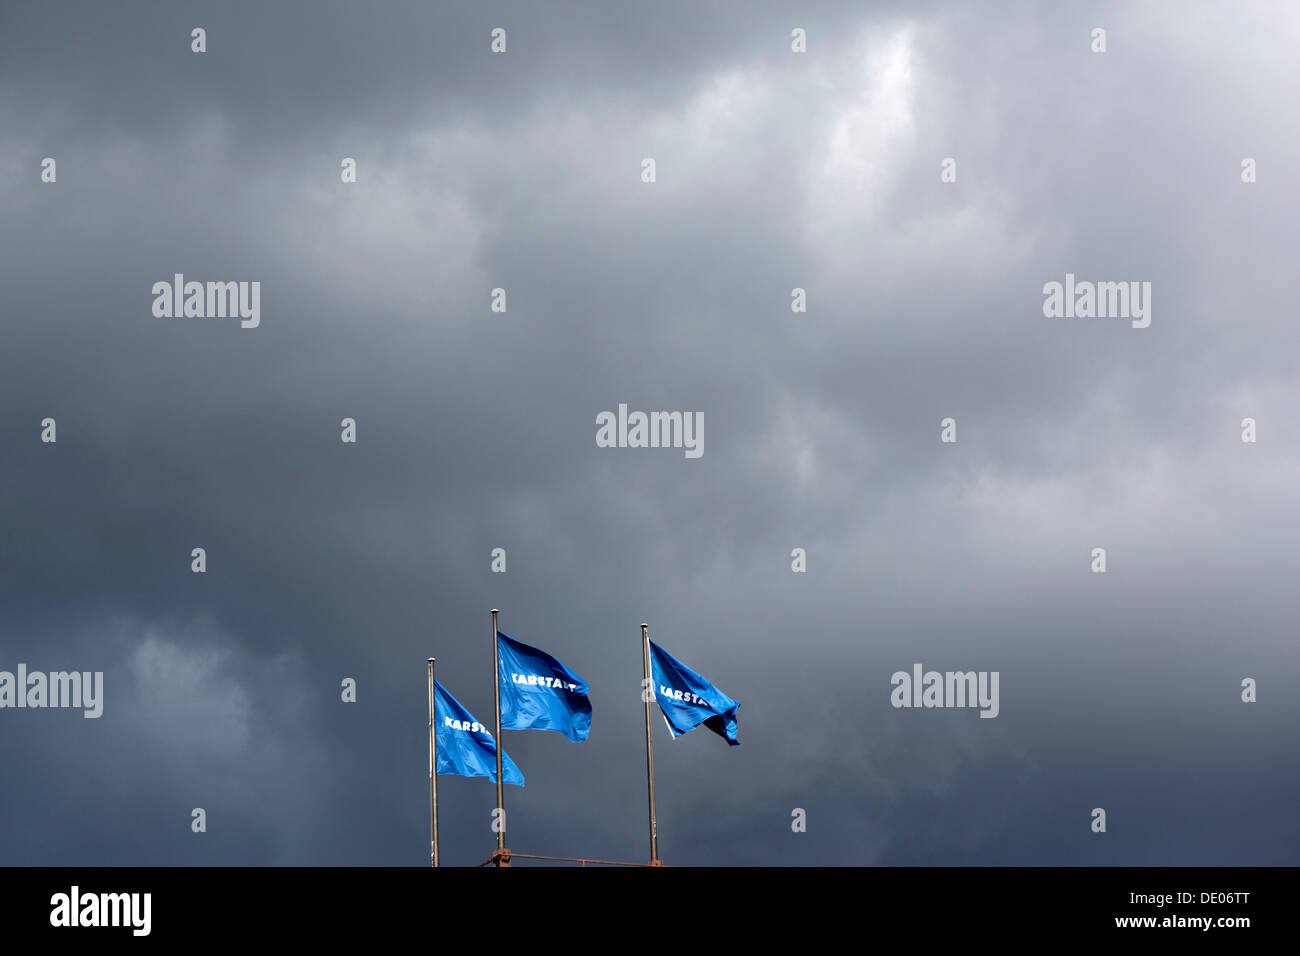 Banderas de Karstadt, nubes oscuras, las tormentas, la imagen simbólica Foto de stock